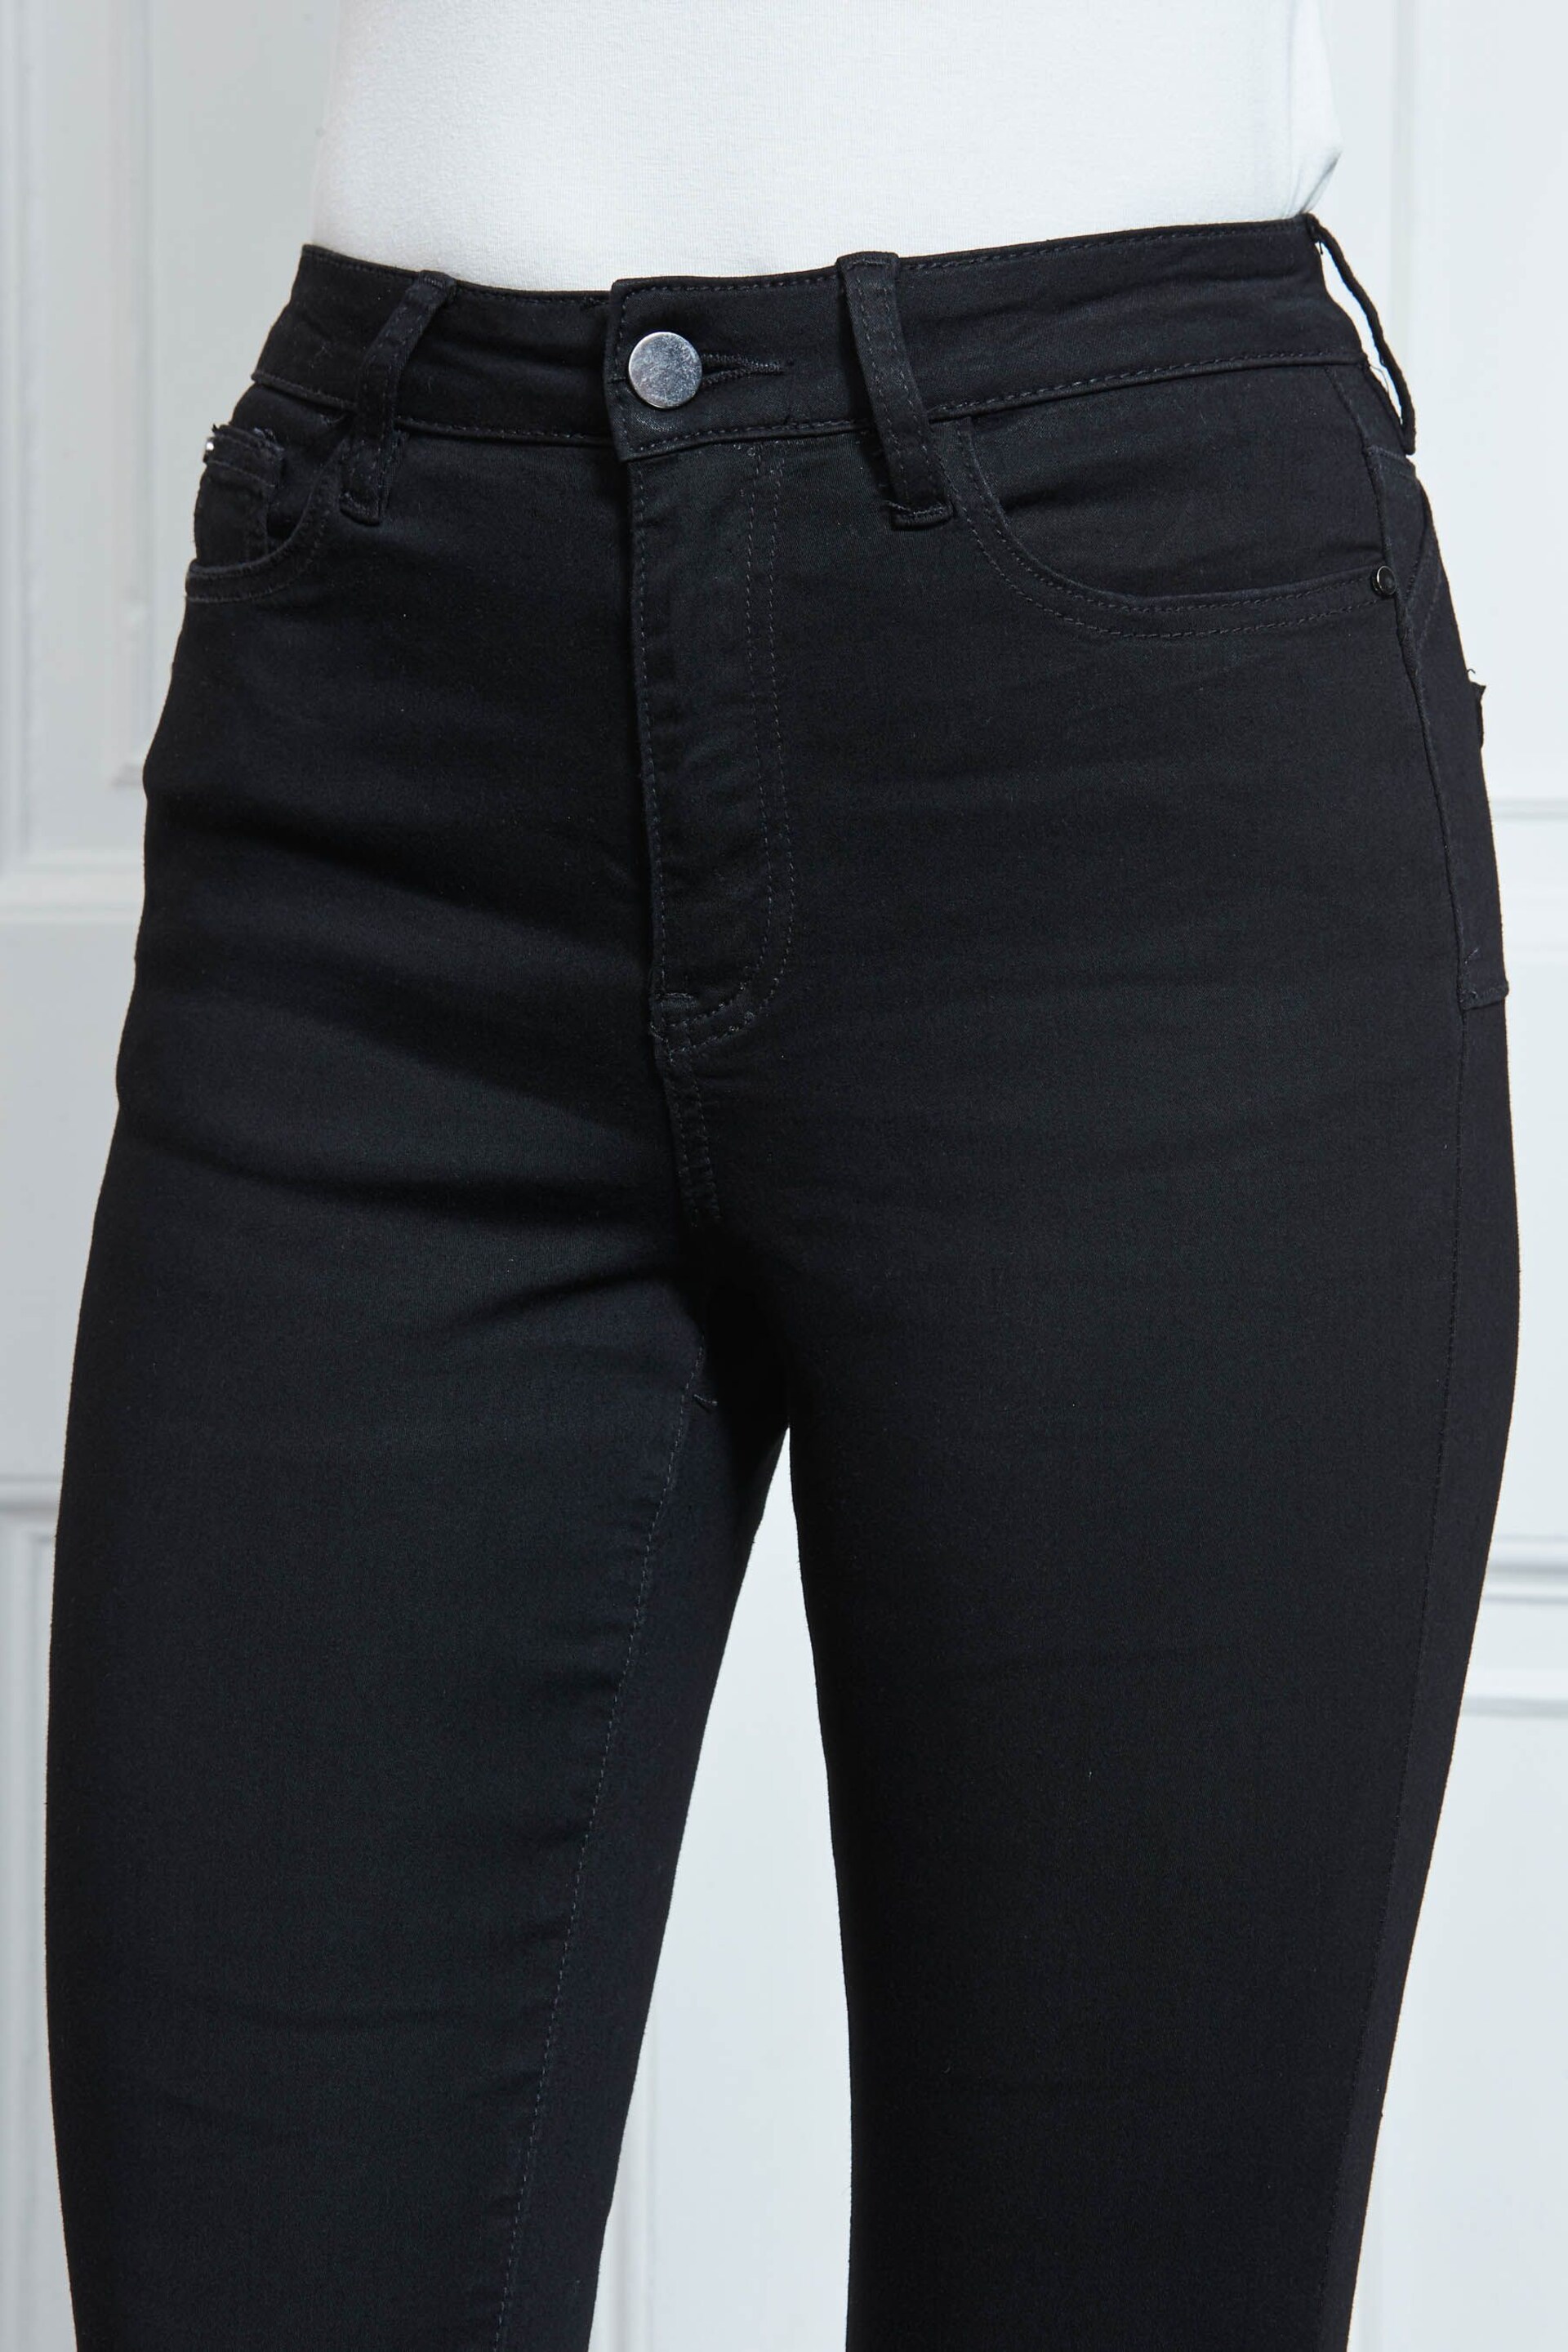 Sosandar Black Chrome Tall Sculpting Skinny Jeans - Image 3 of 4